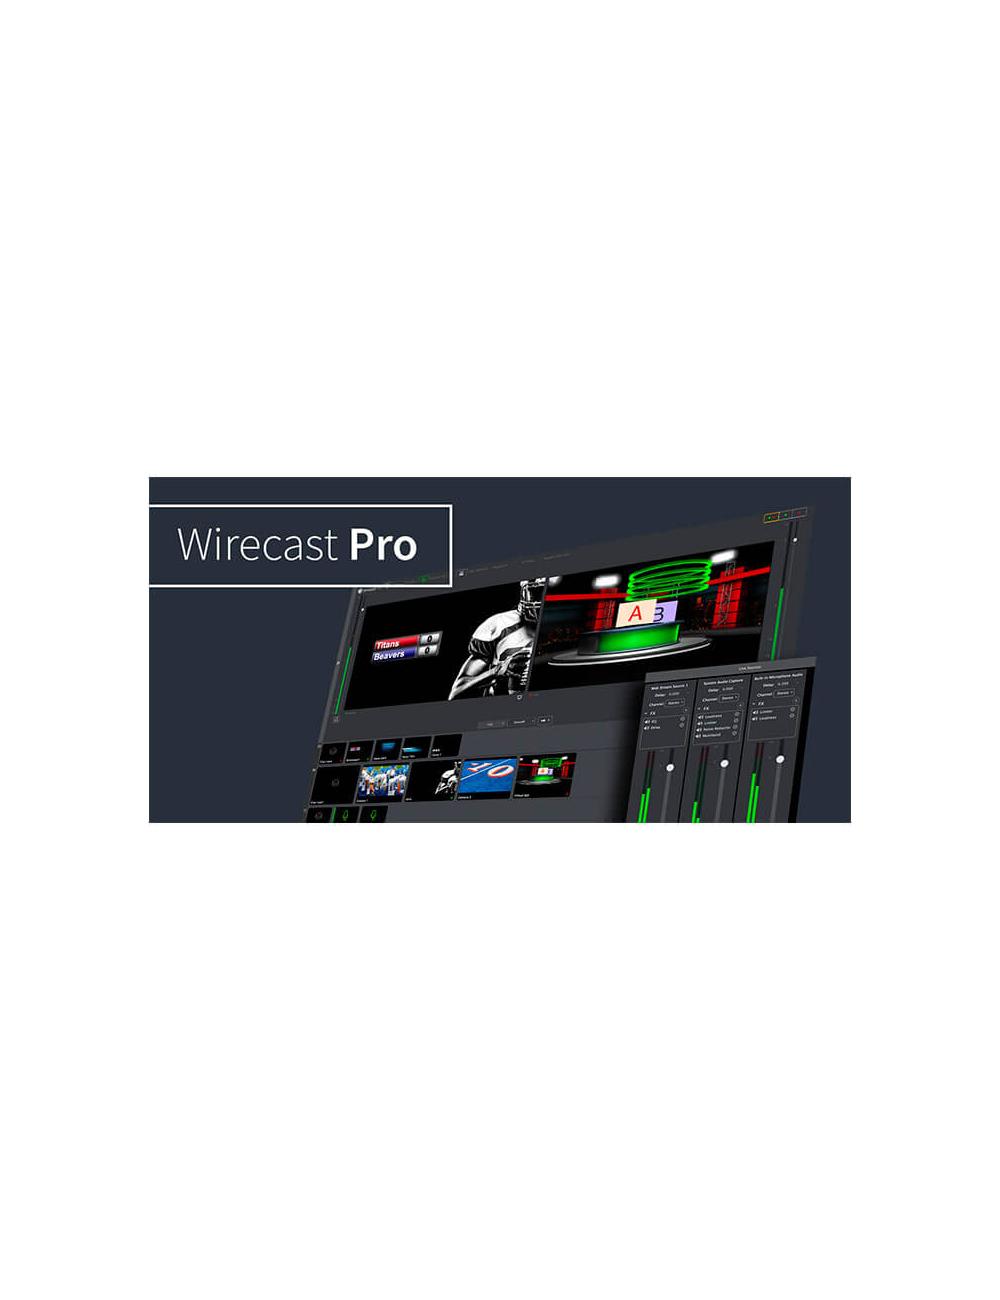 wirecast pro 6 audio input wont recognize